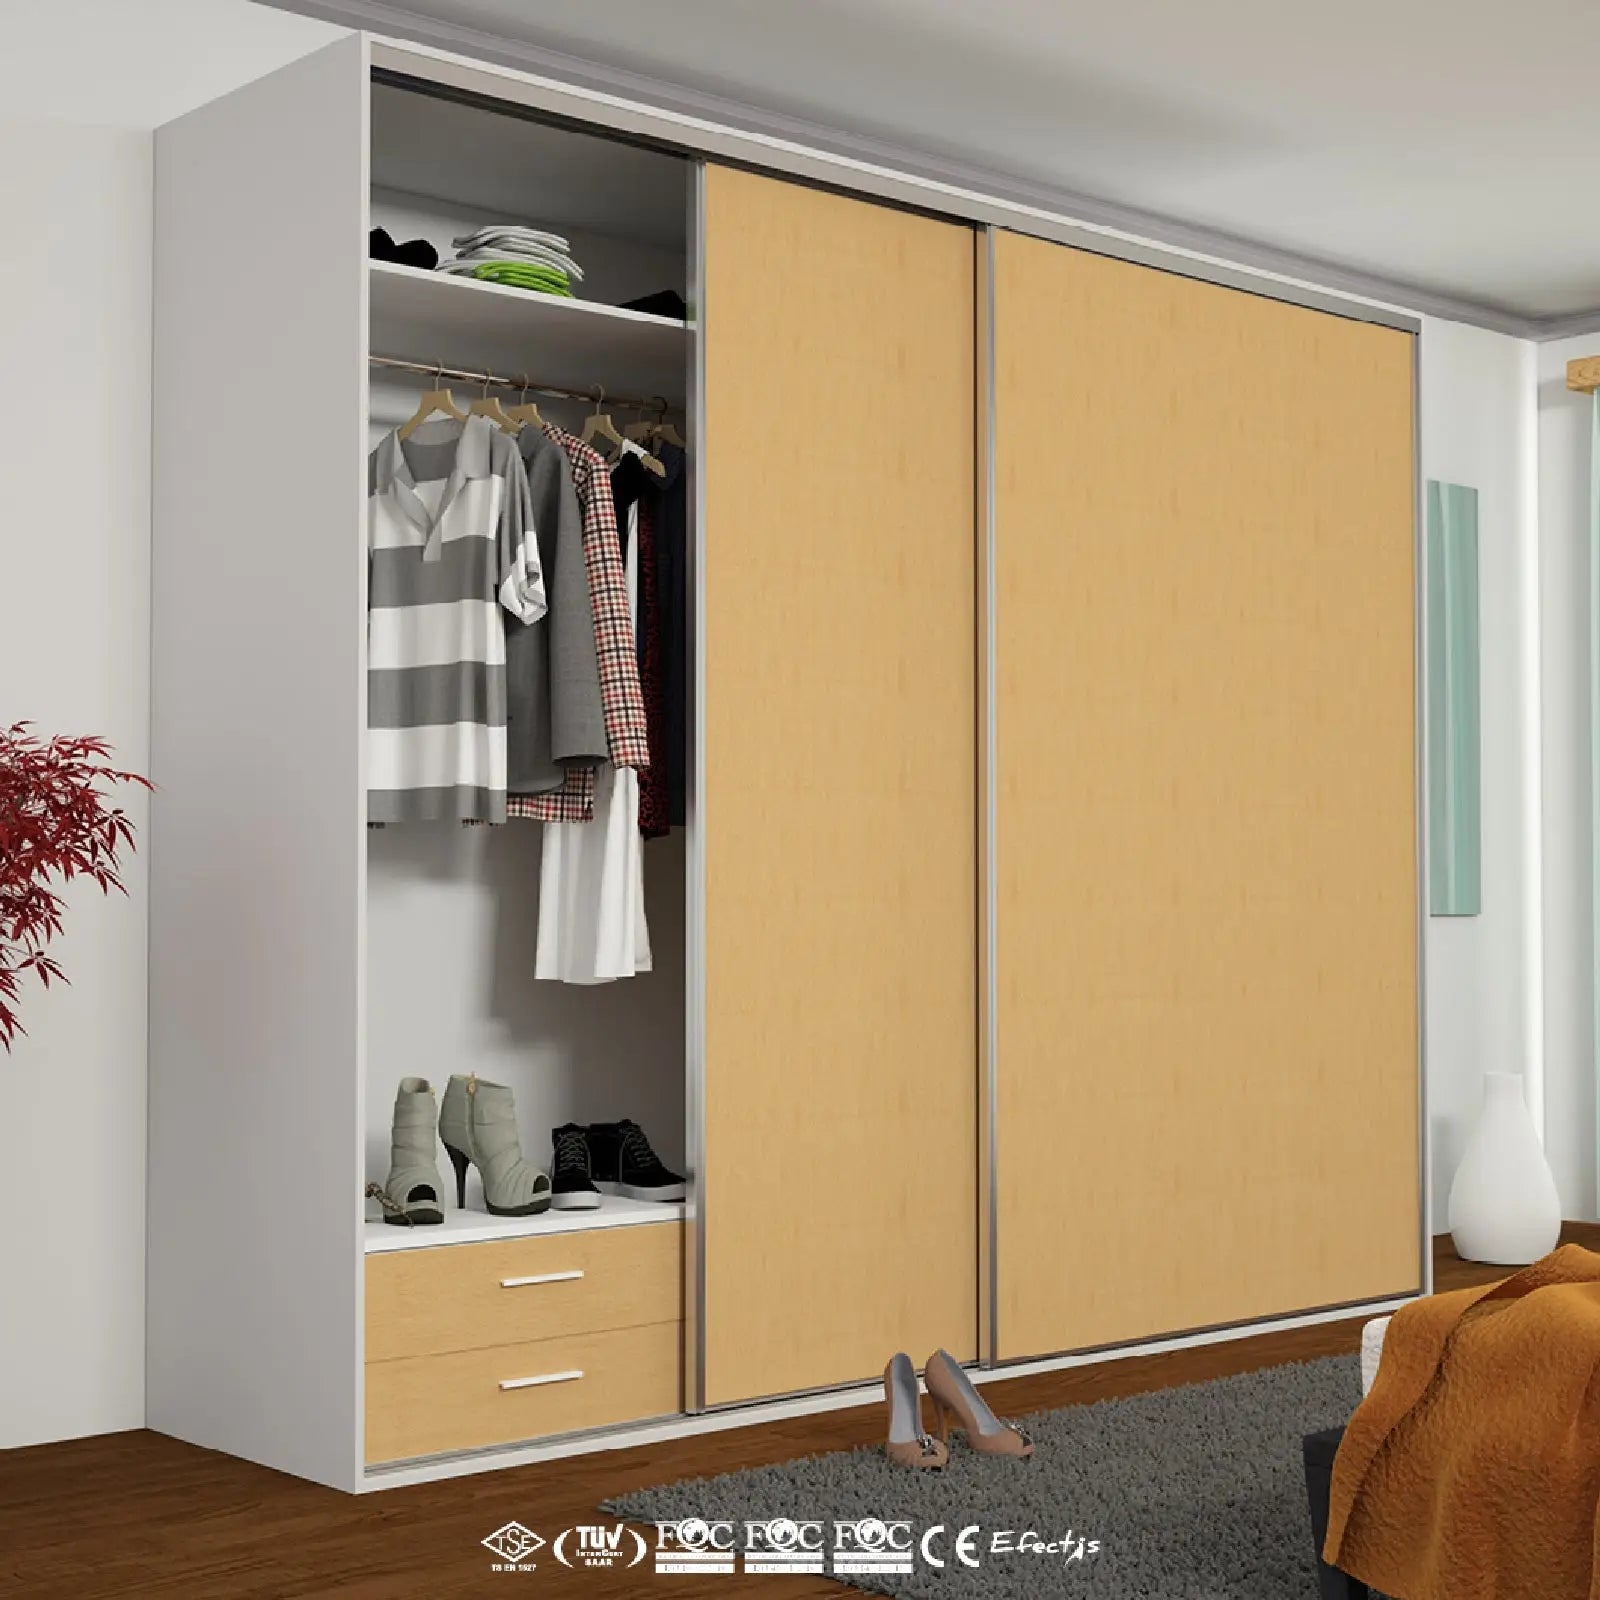 PS-Slide Sliding Door Wardrobe System - 2 Door - 1800mm Track - Both Way Soft Close - Decor And Decor